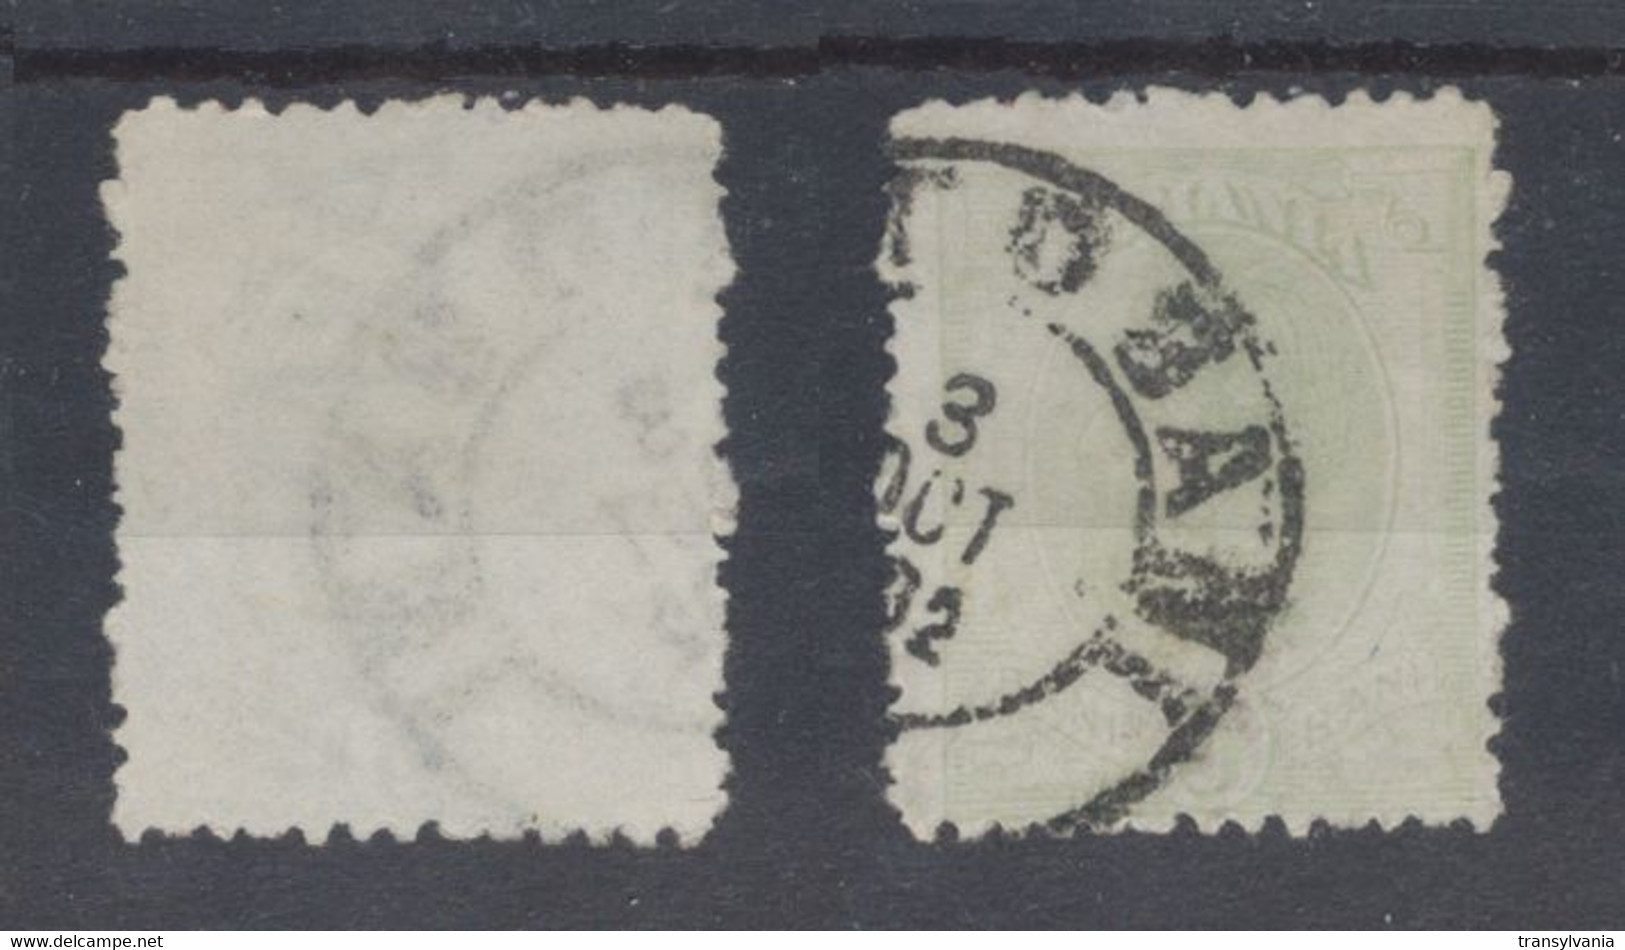 Romania 1900 Wheat Ear Issue 5 Bani Used Stamp With Scarce JOHANNOT Watermark - Varietà & Curiosità